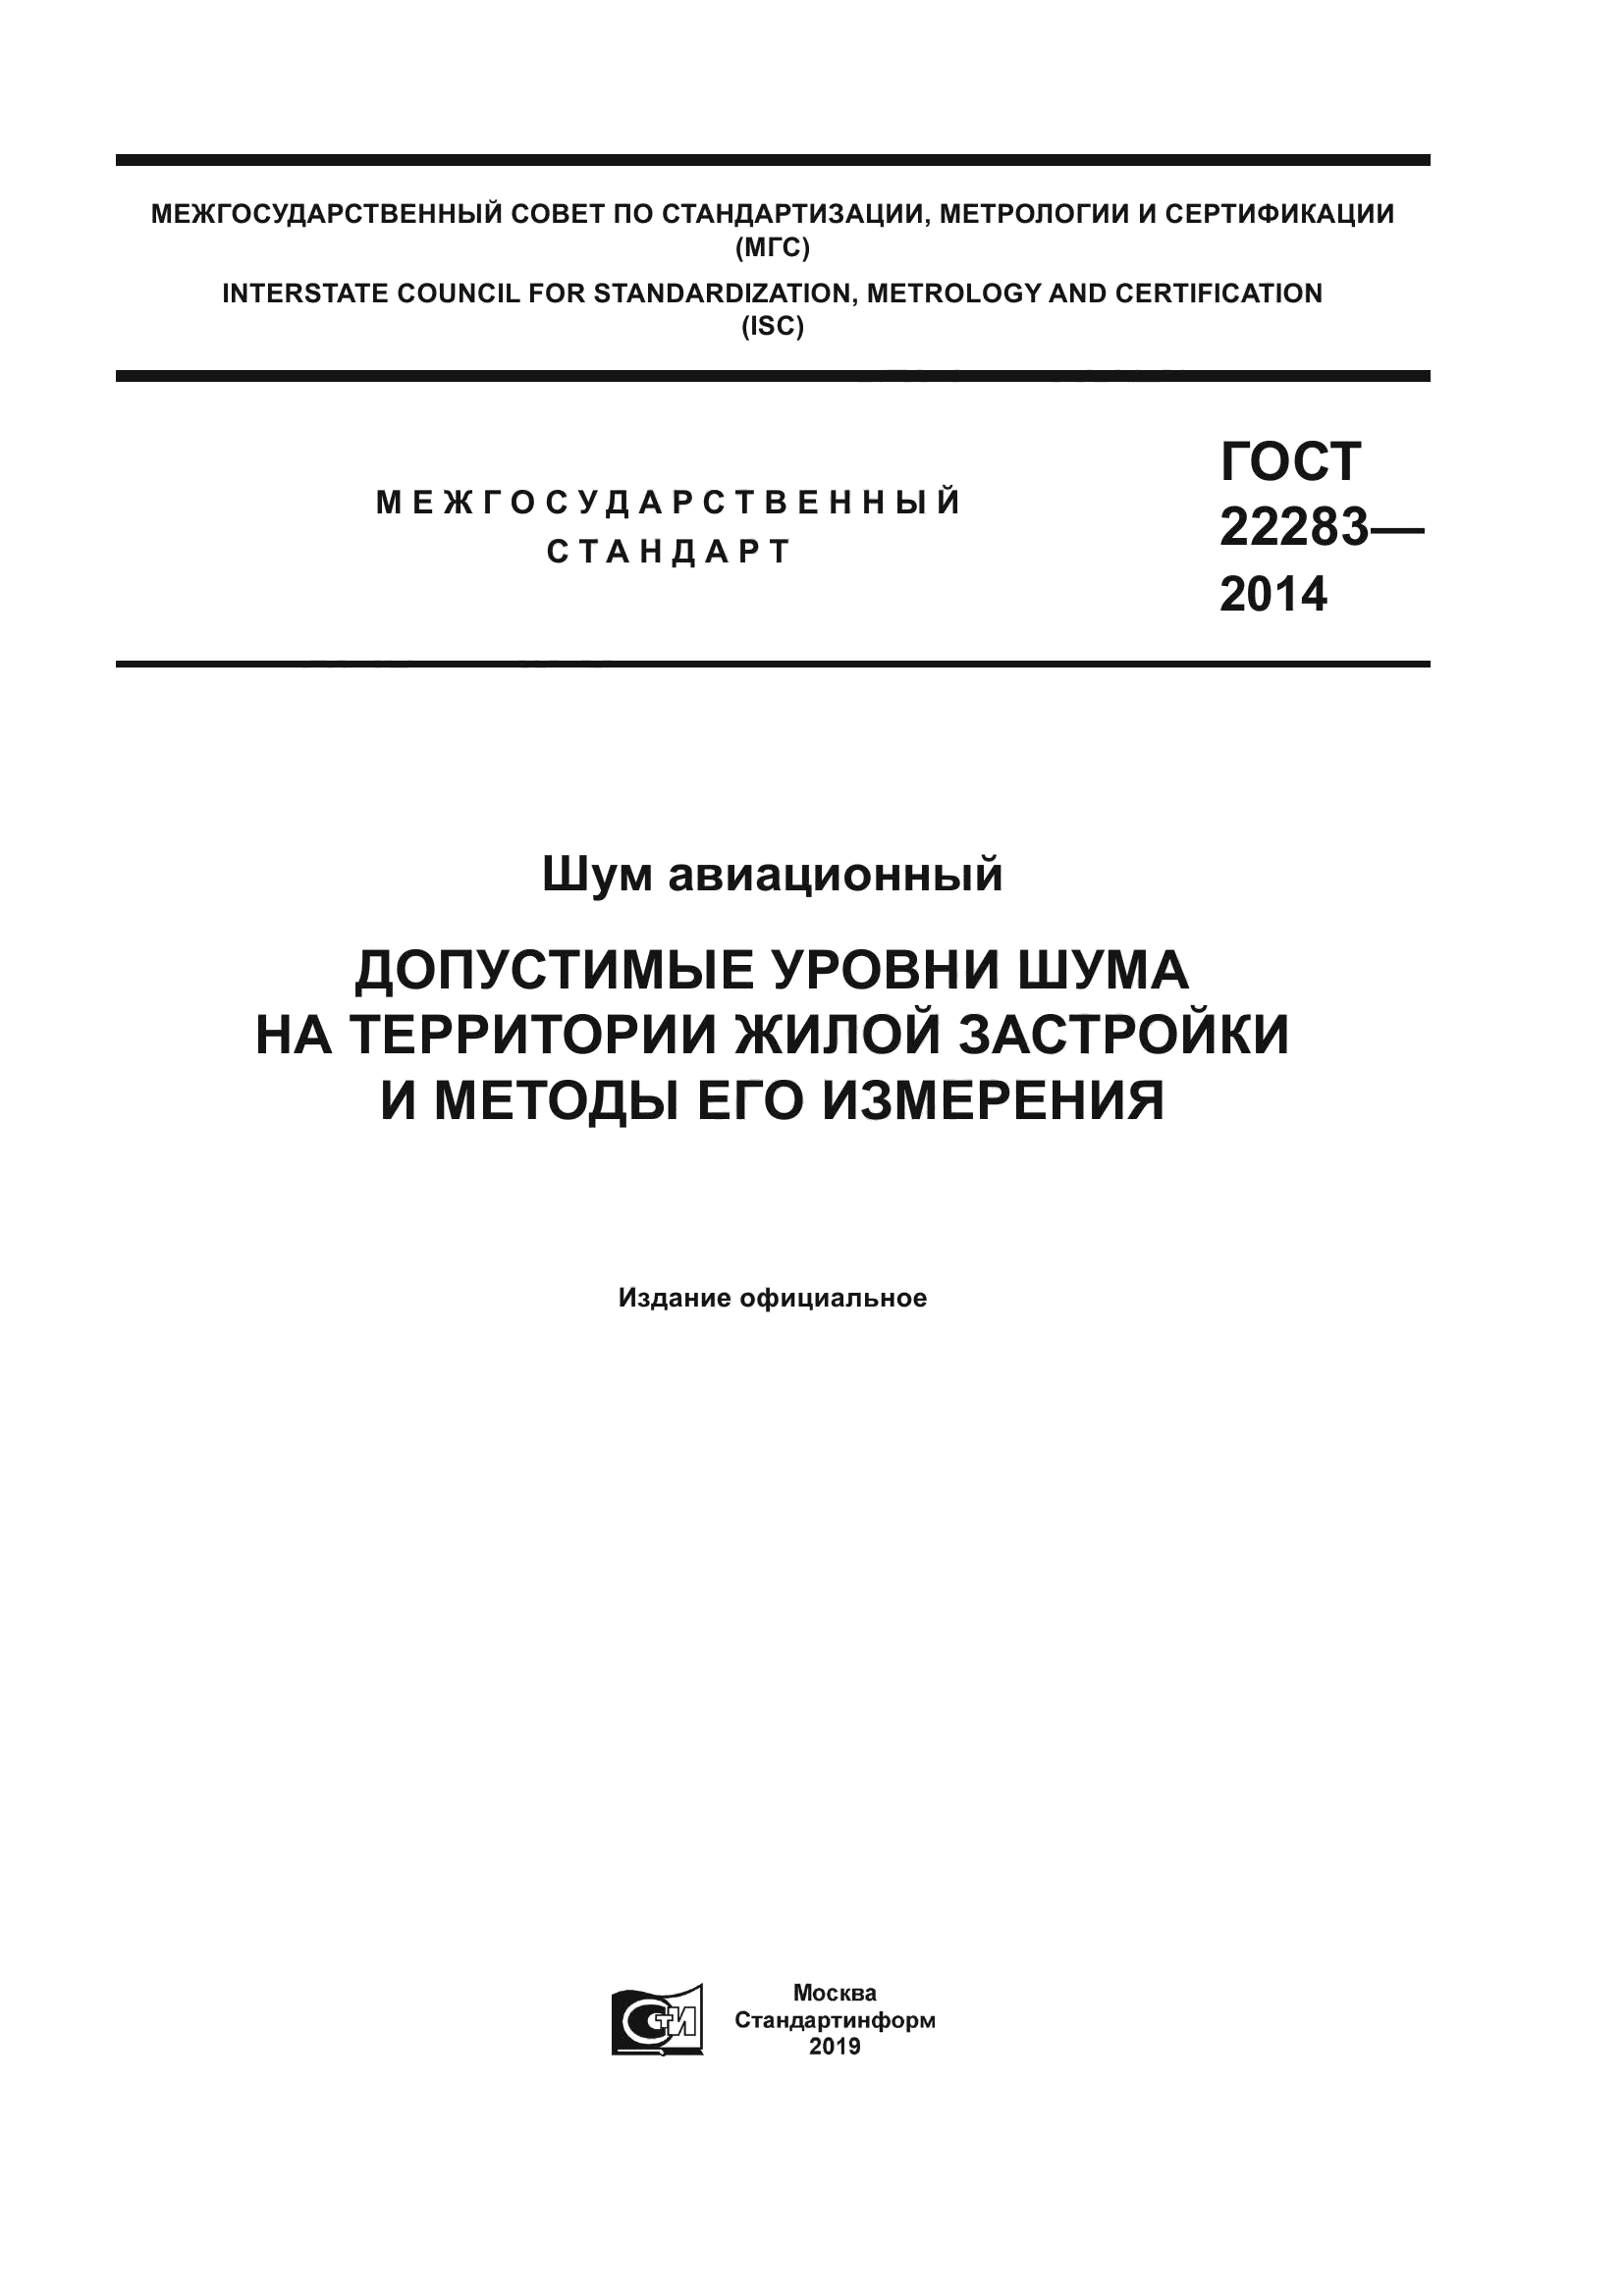 ГОСТ 22283-2014